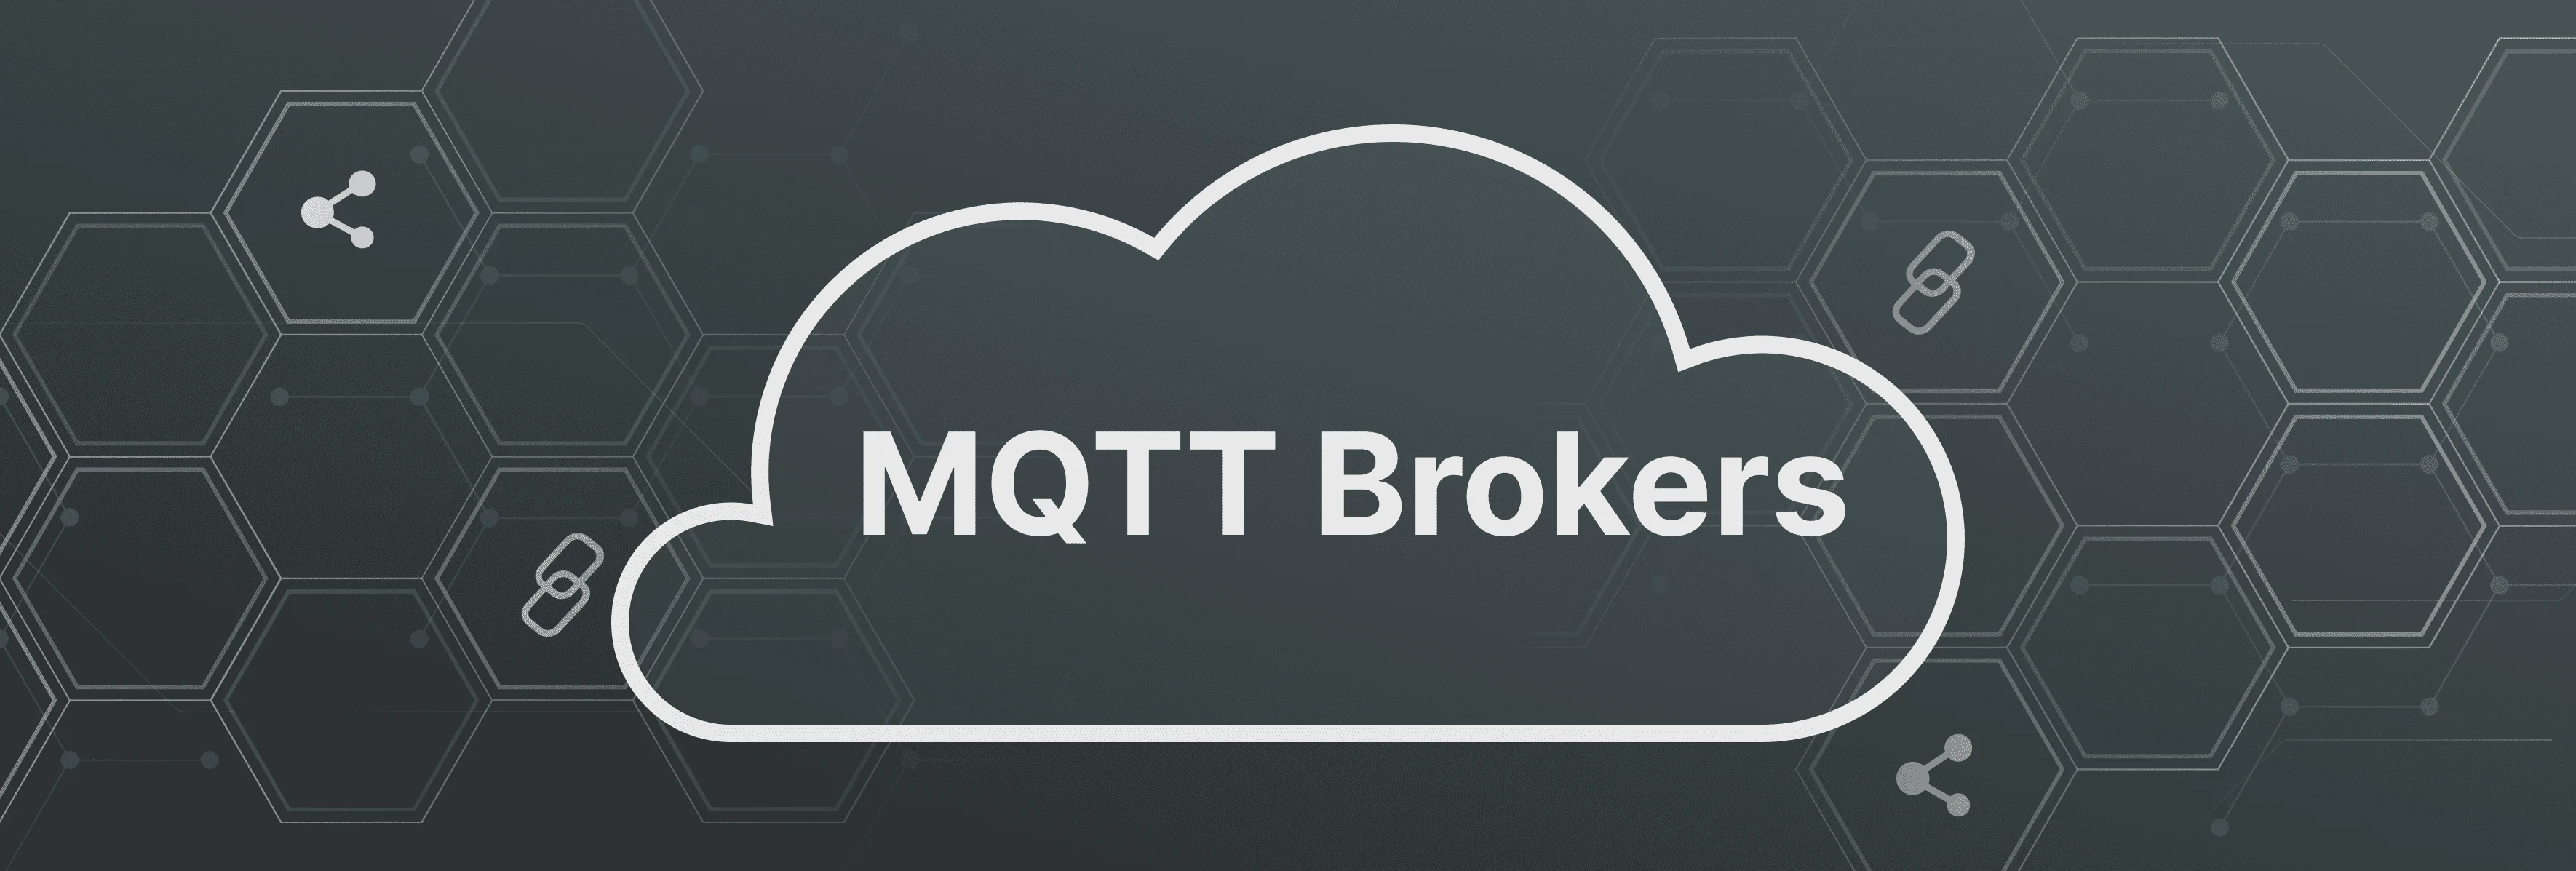 How to Choose the Best MQTT Broker For IoT? | Webbylab